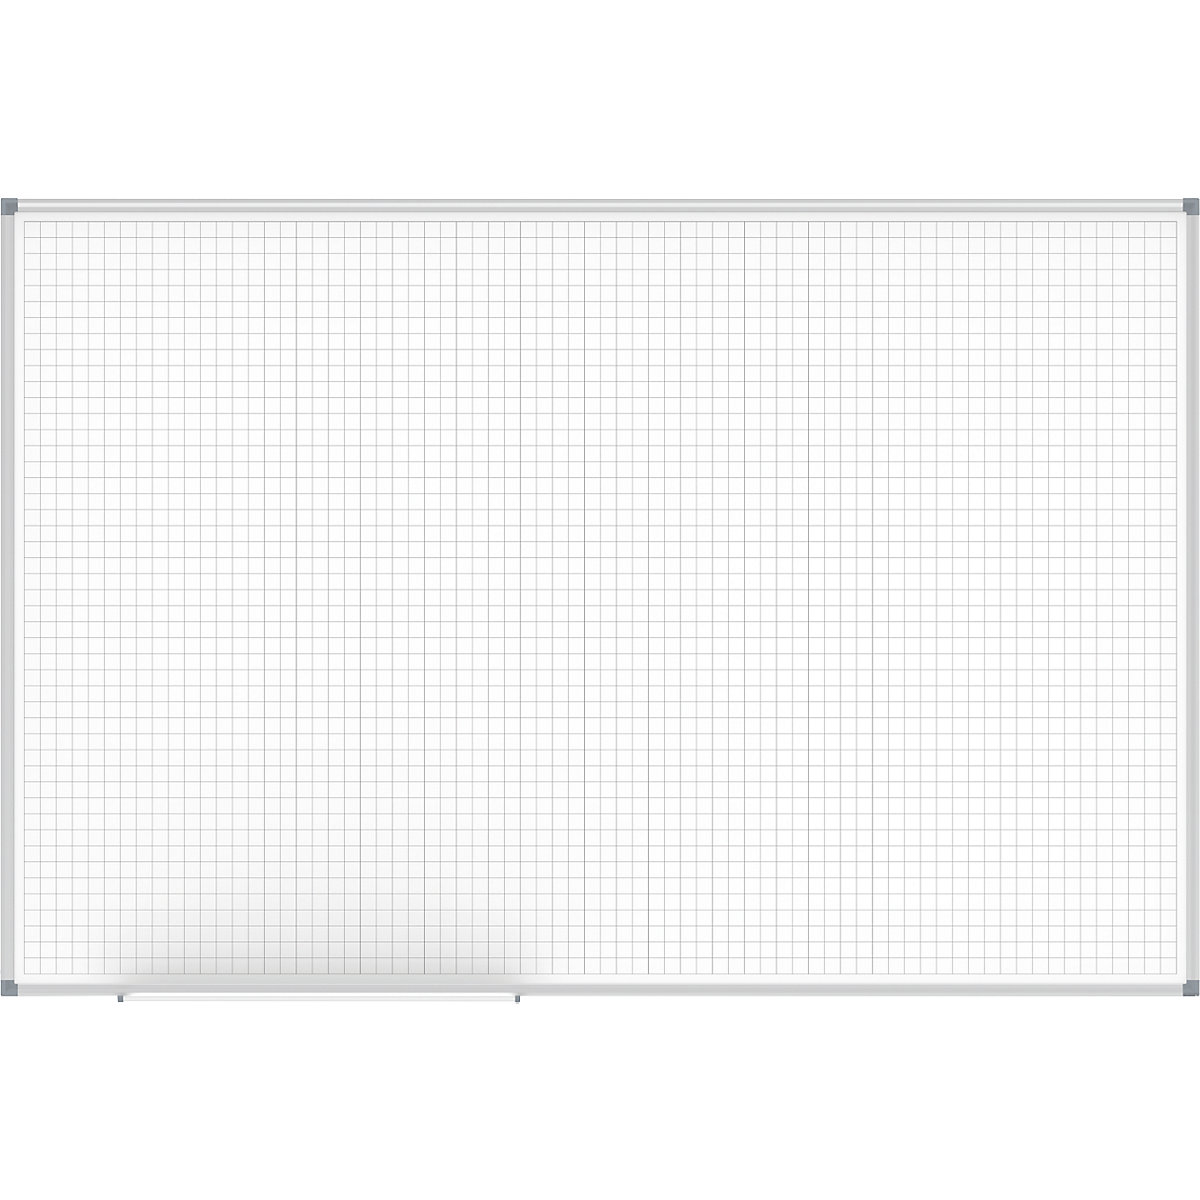 Tablă cu caroiaj MAULstandard, albă – MAUL, caroiaj 20 x 20 mm, lăț. x î. 1500 x 1000 mm-2